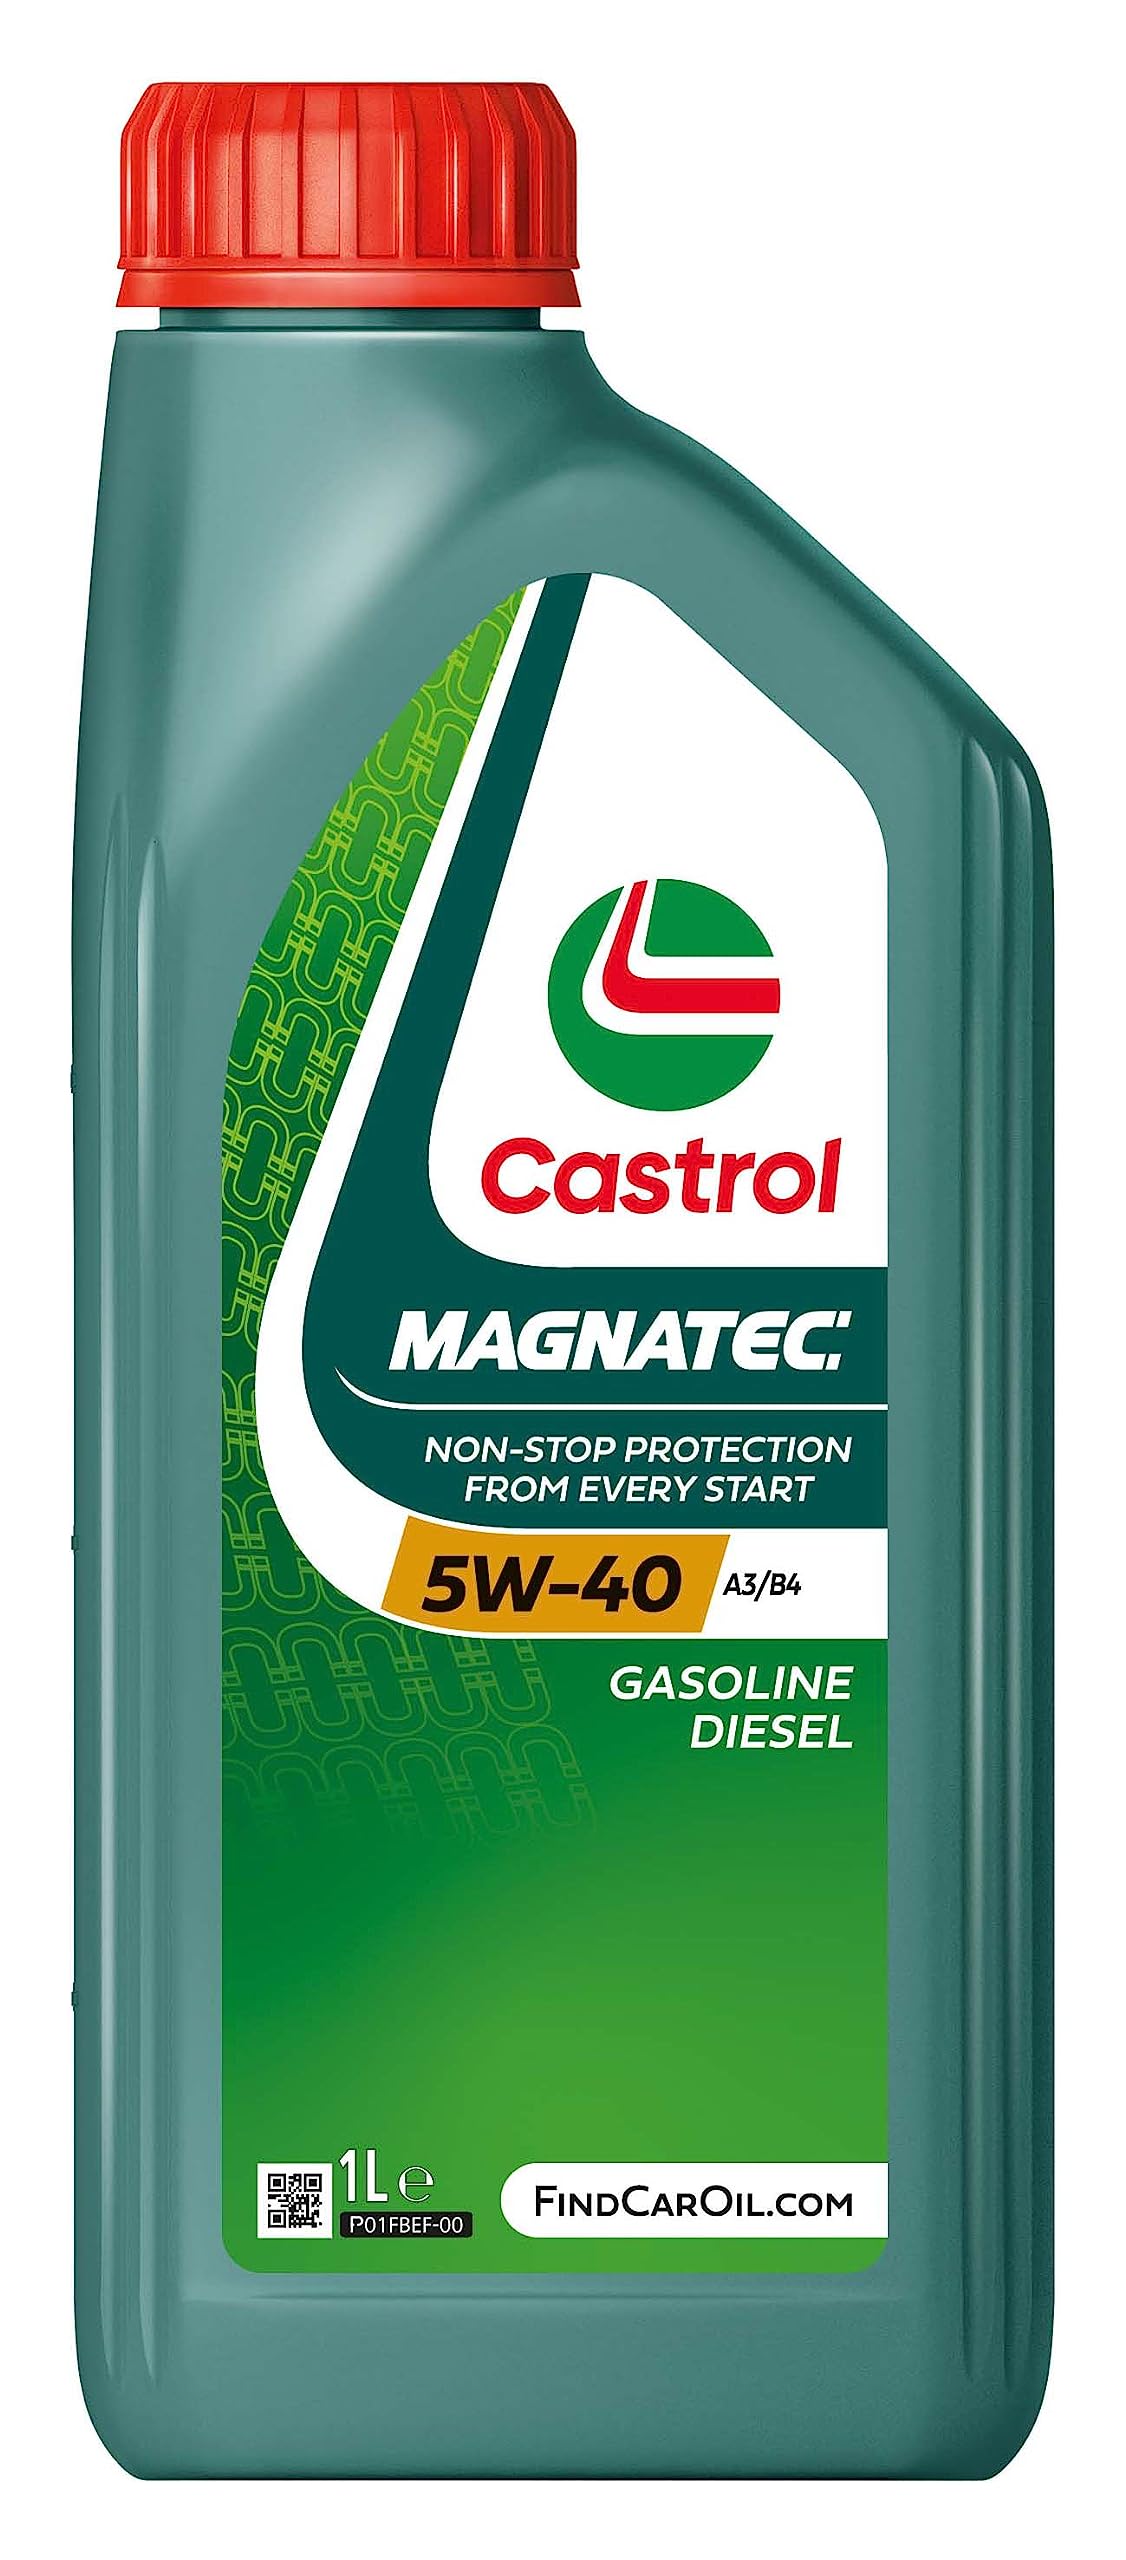 Castrol MAGNATEC 5W-40 A3/B4 Motoröl, 1L von Castrol